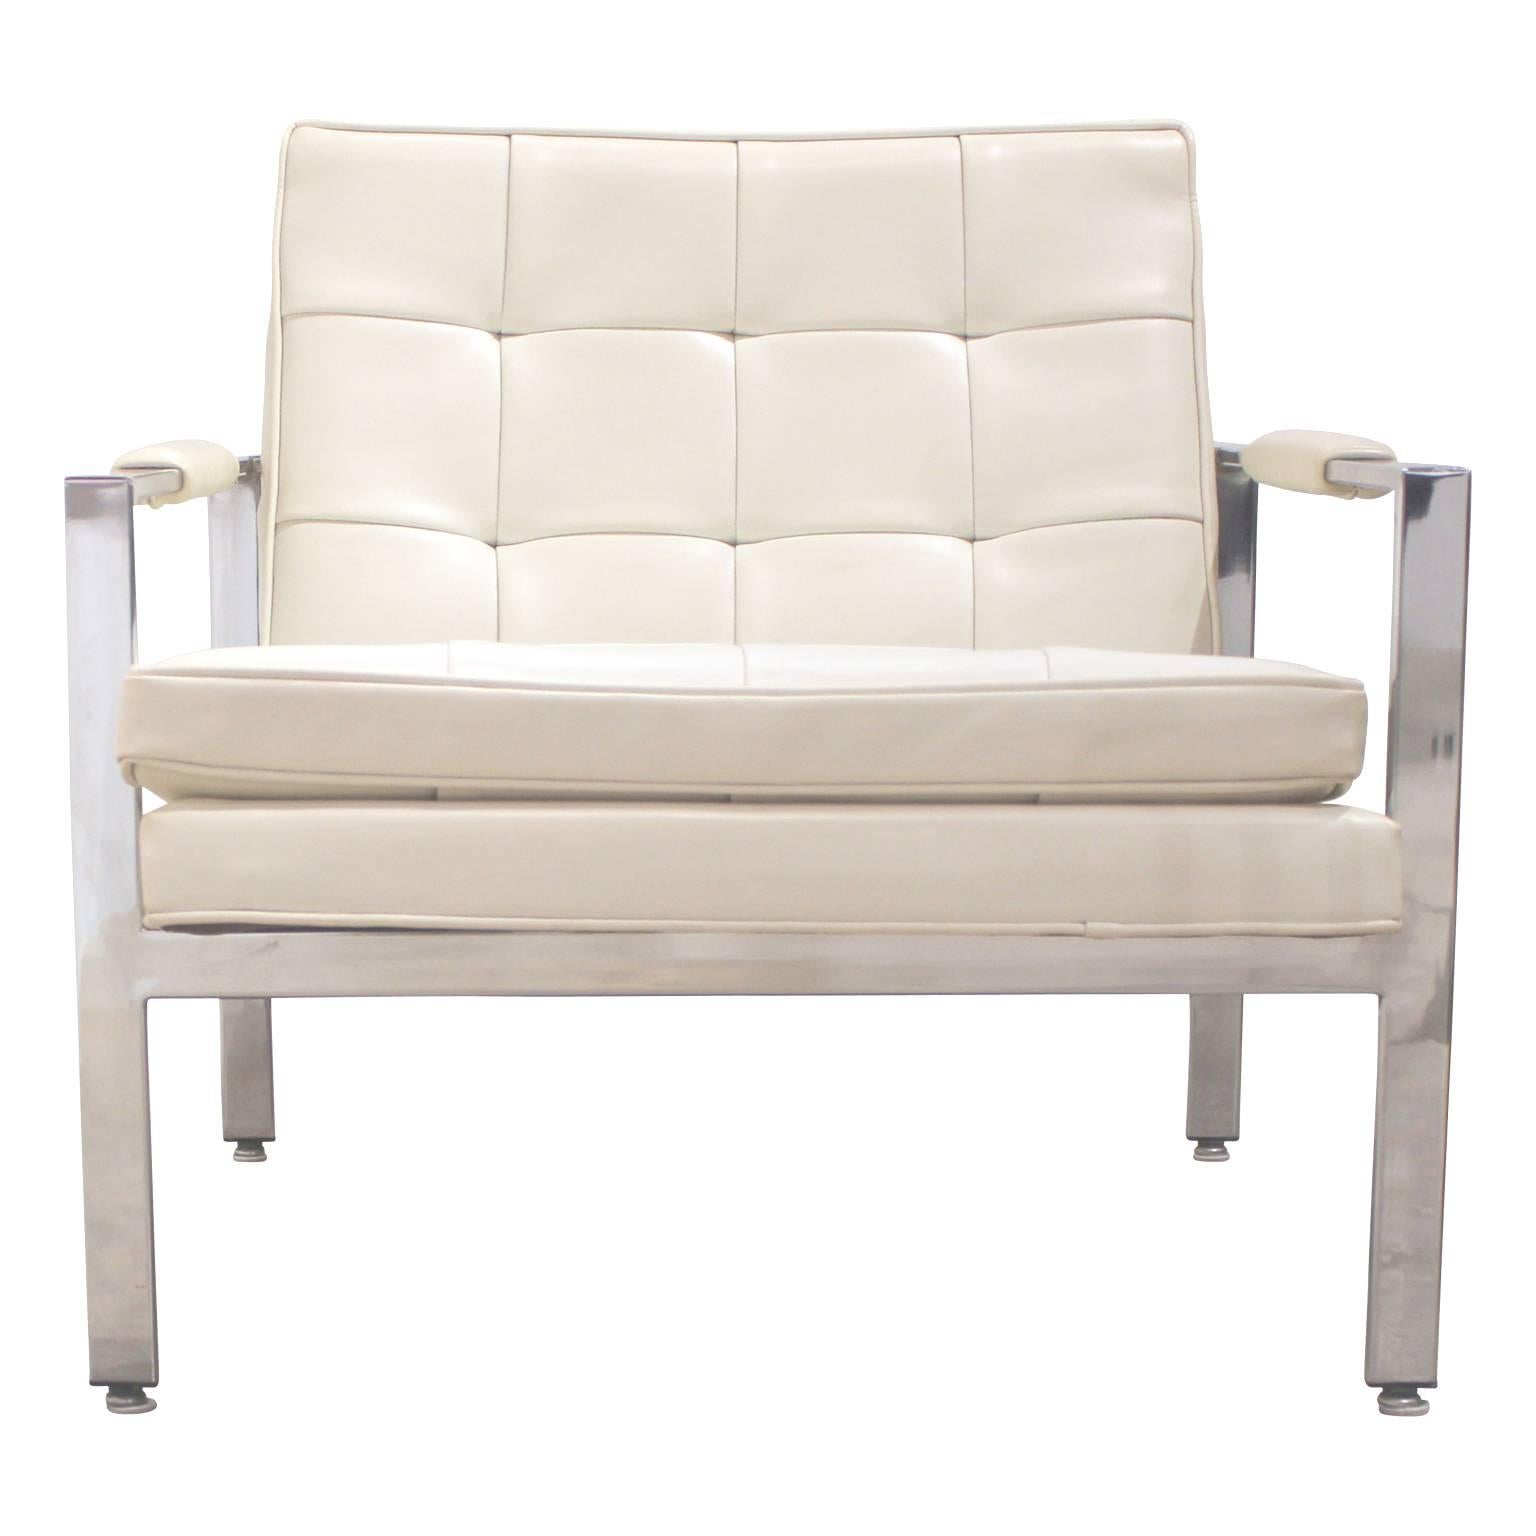 Mid-20th Century Pair of Modern Milo Baughman White Naugahyde and Chrome Lounge Chairs